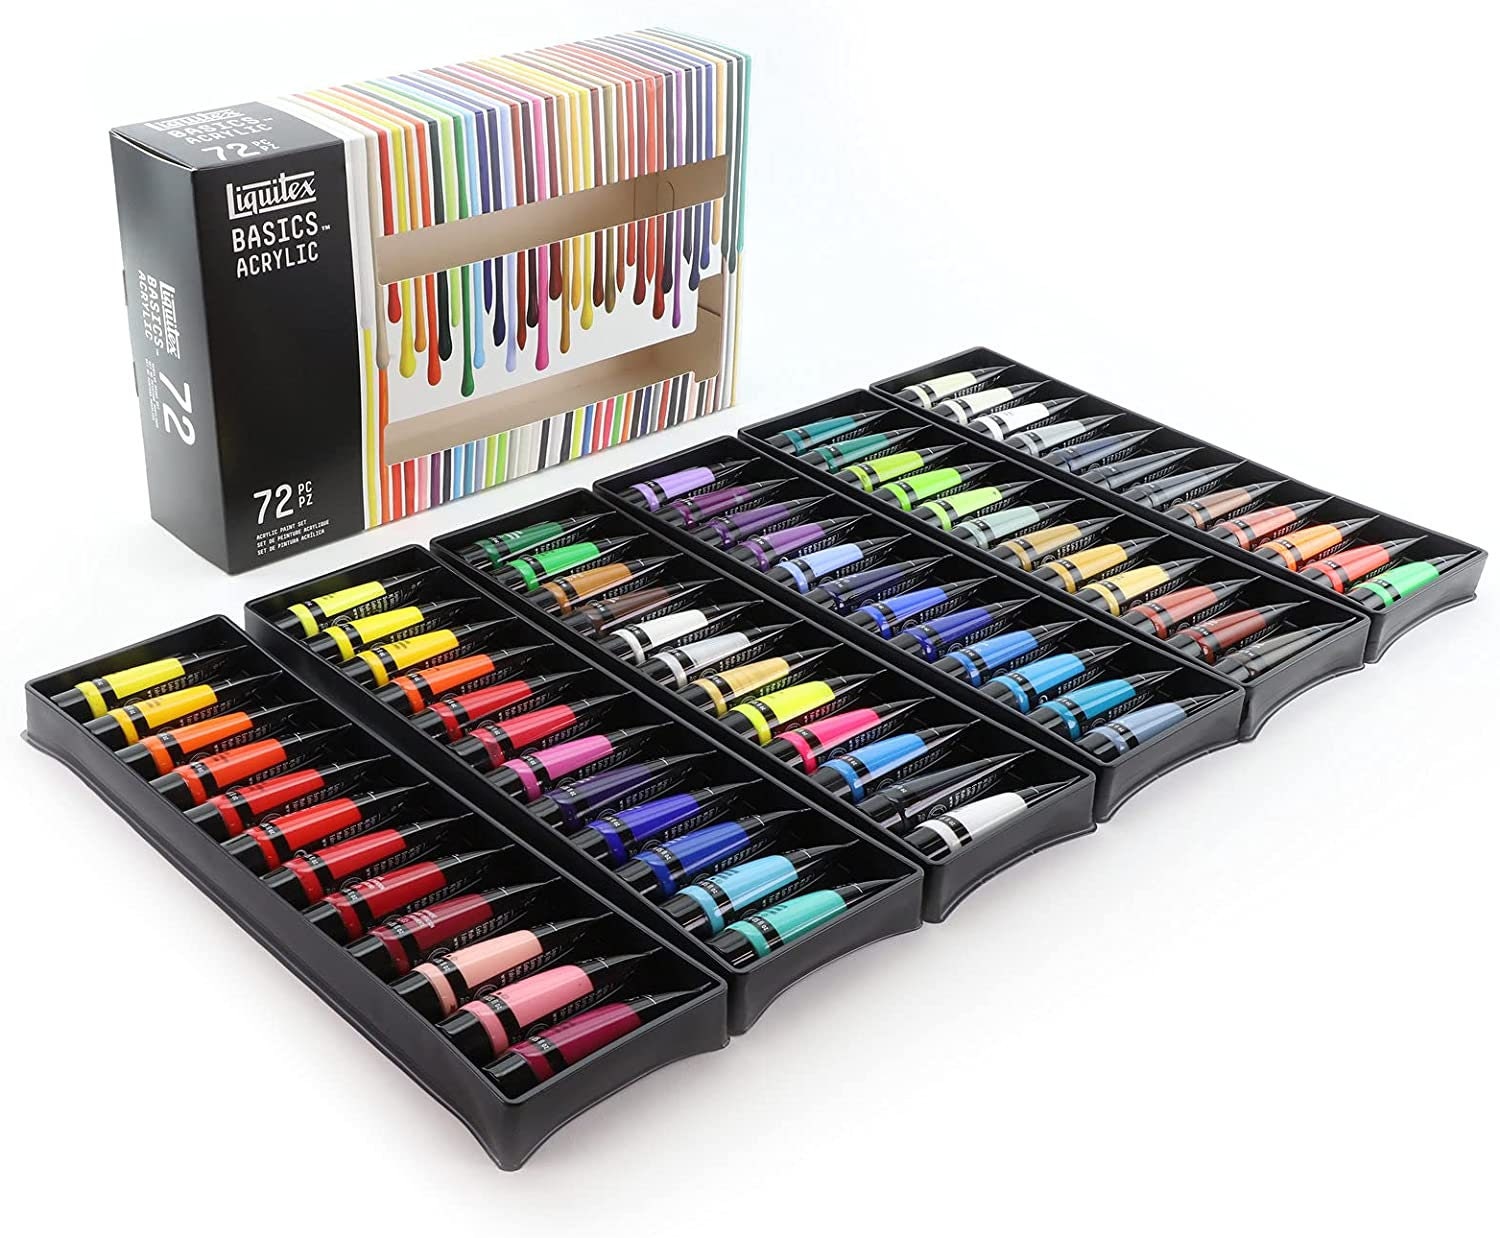 Liquitex Basics Acrylic Paint 118ml - 72 Colours Available